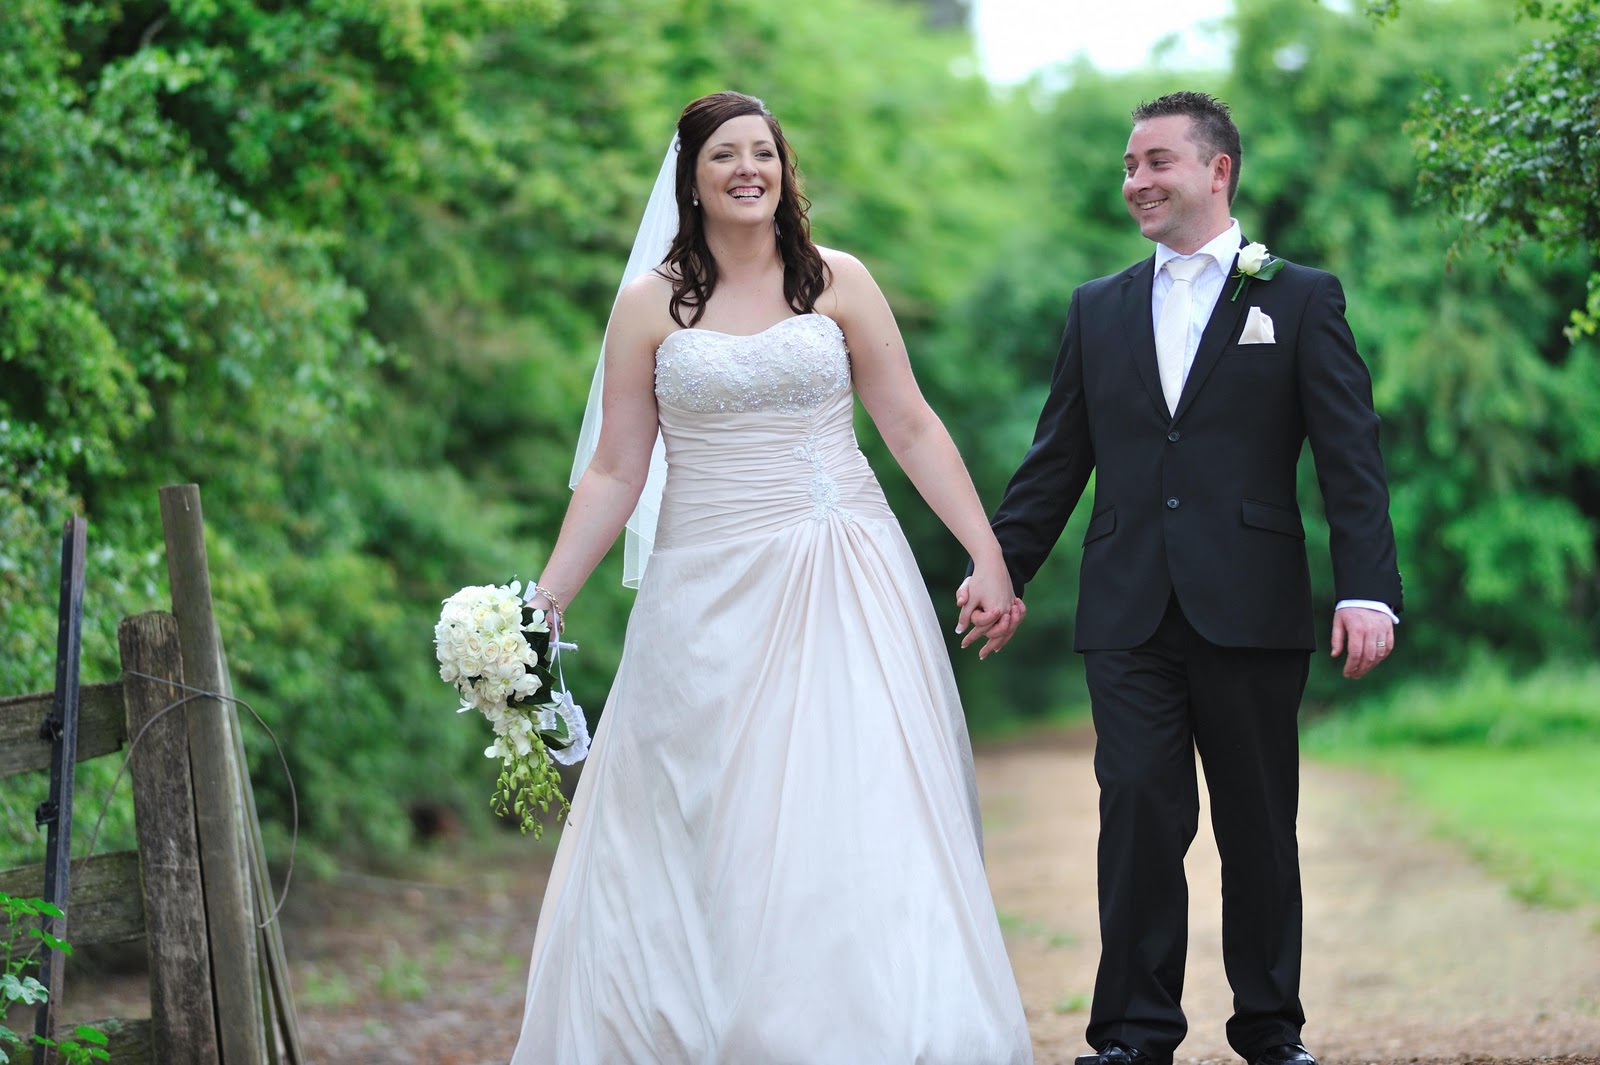 Bride Tasmania Blog: Real Life Weddings